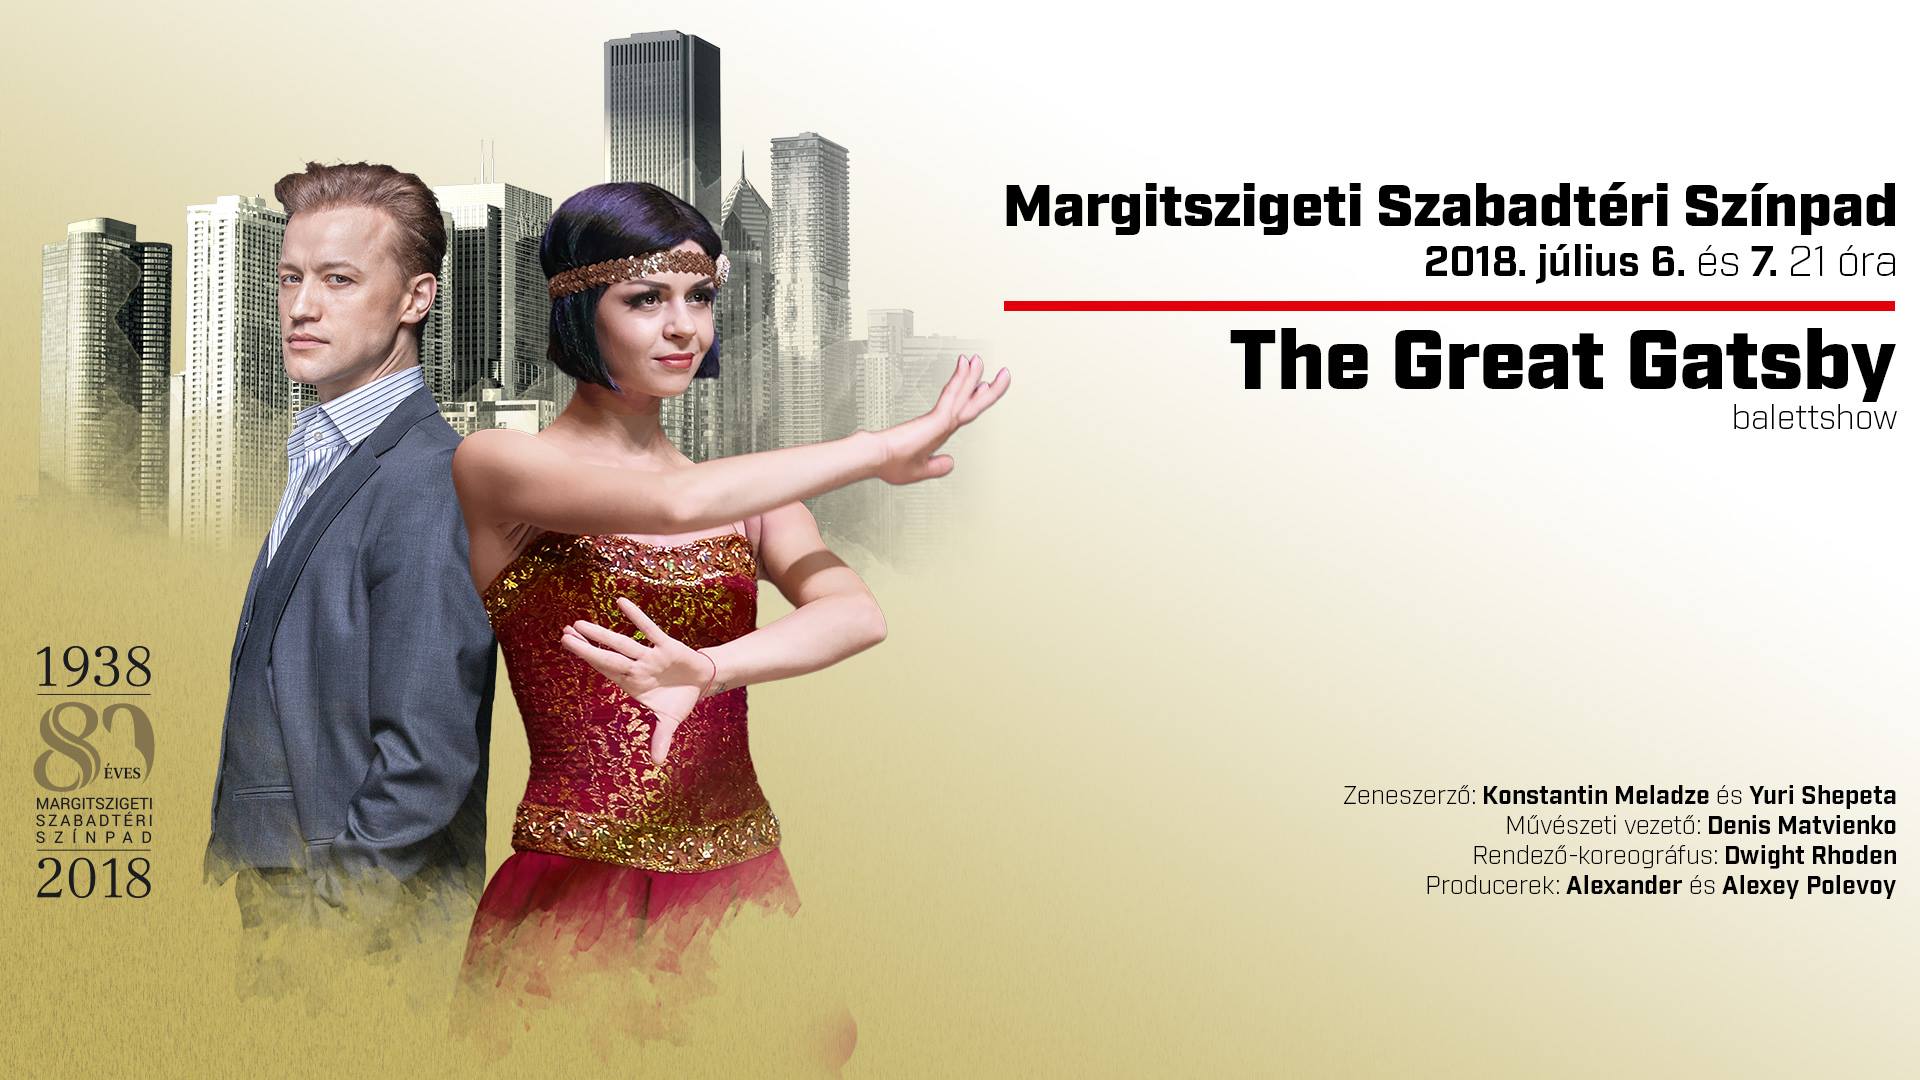 The Great Gatsby - balettshow